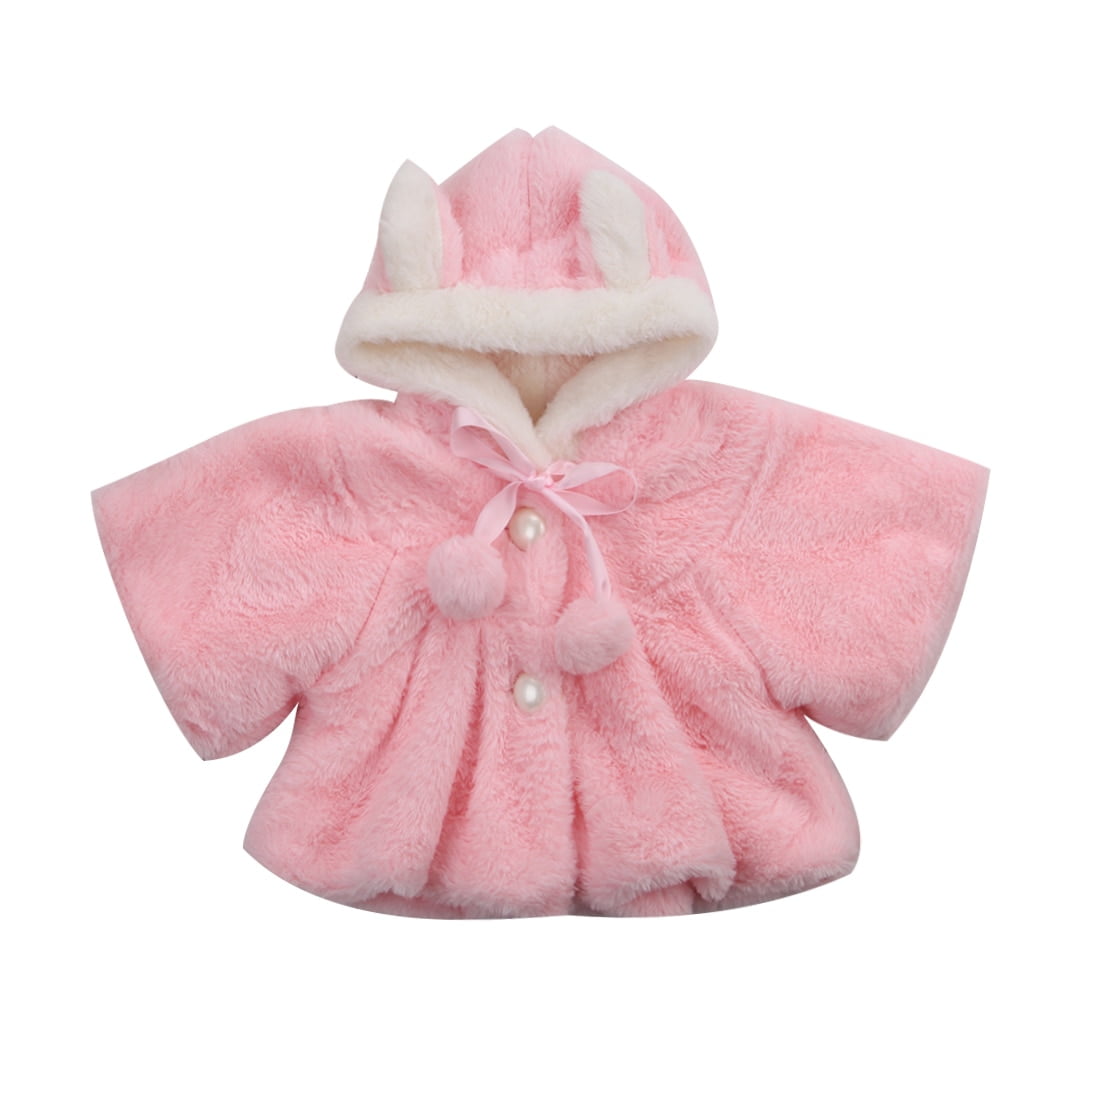 Toddler Baby Girls Cat Hooded Cloak Poncho Jacket Outwear Kids Warm Coat 